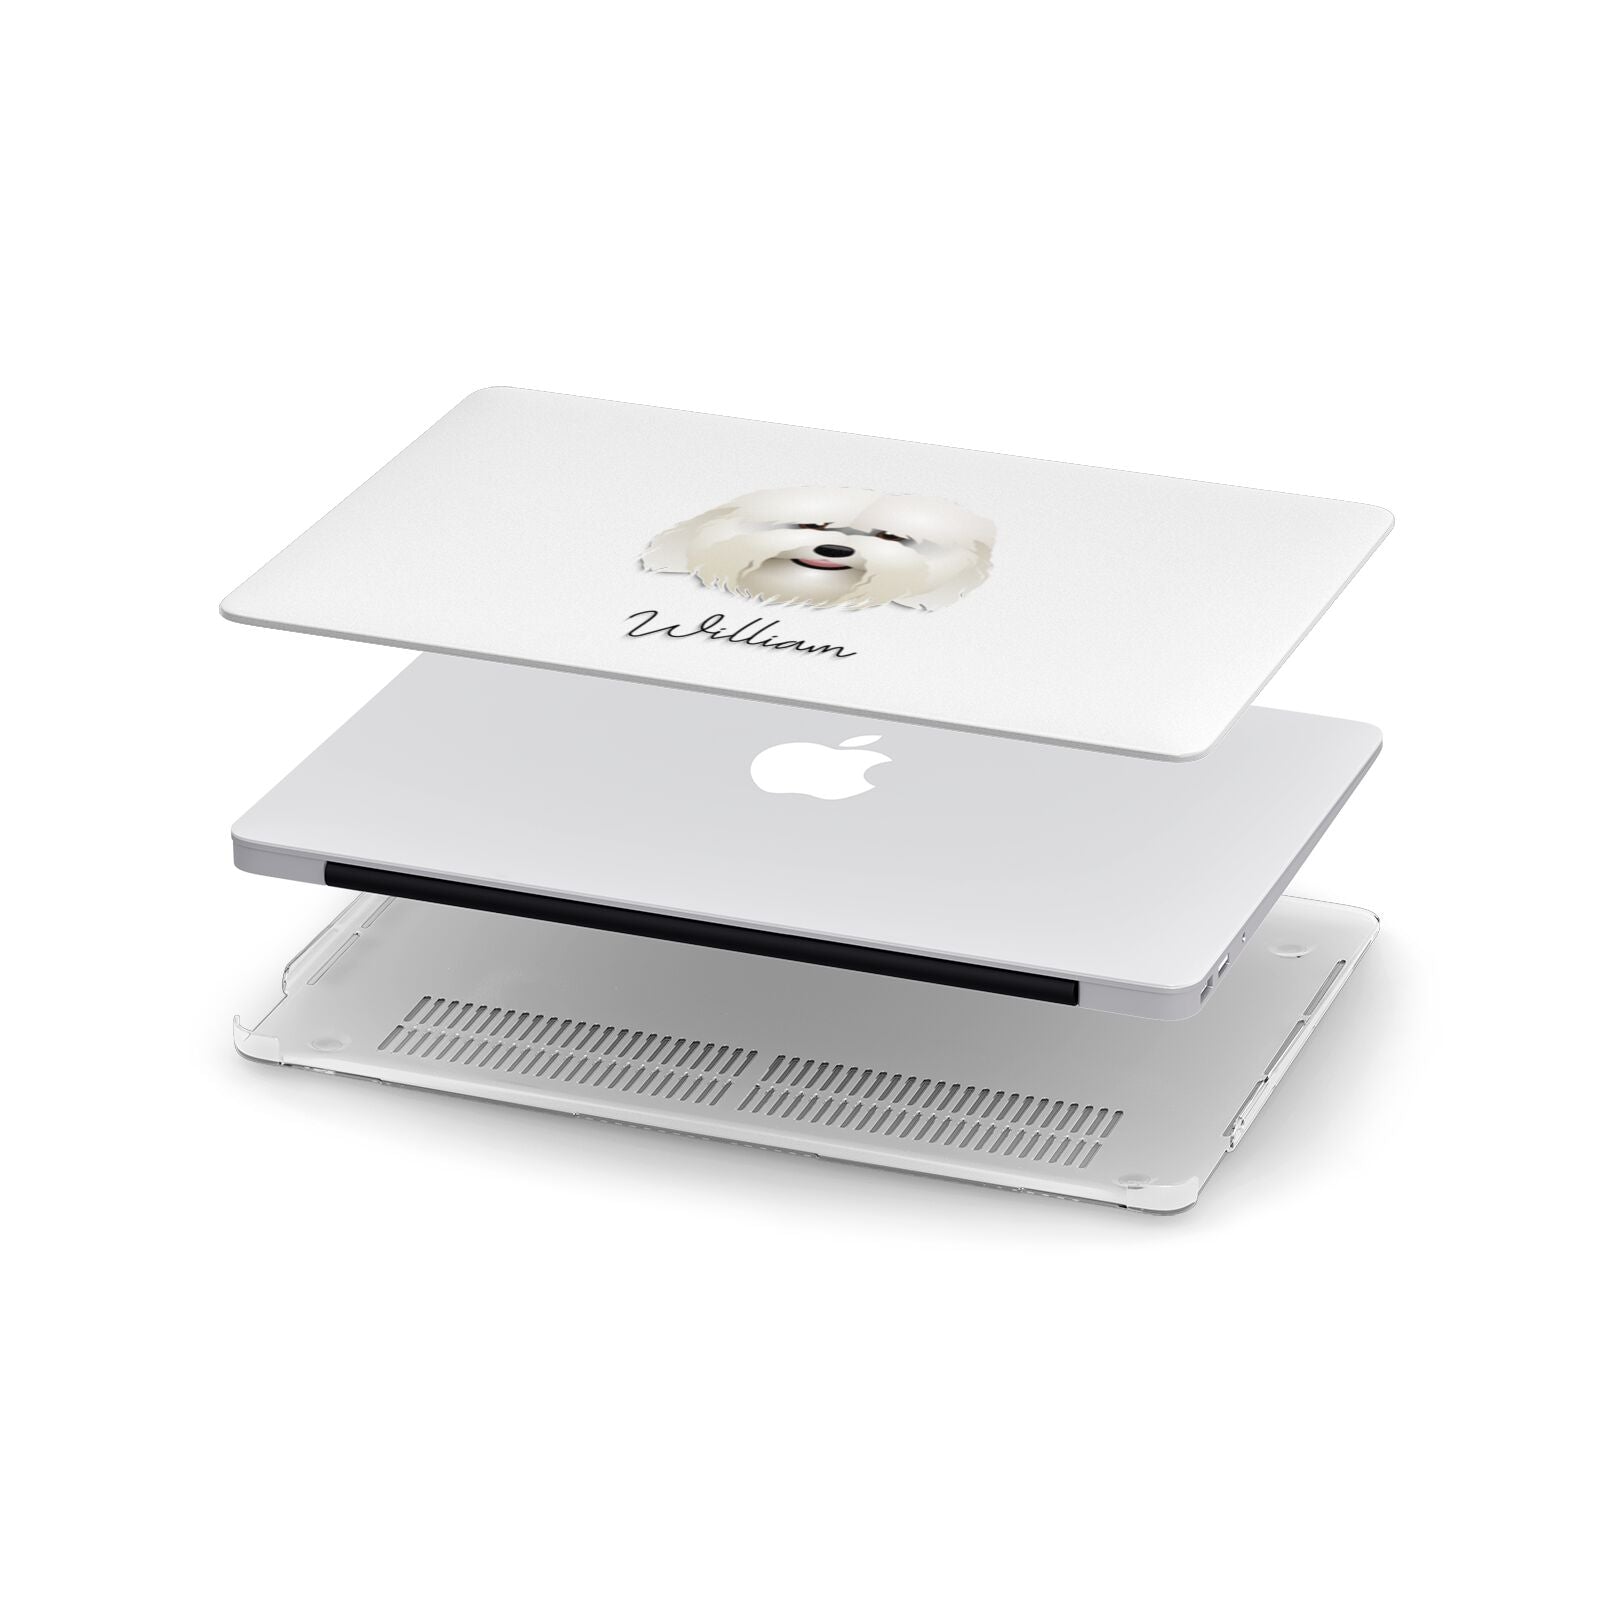 Coton De Tulear Personalised Apple MacBook Case in Detail